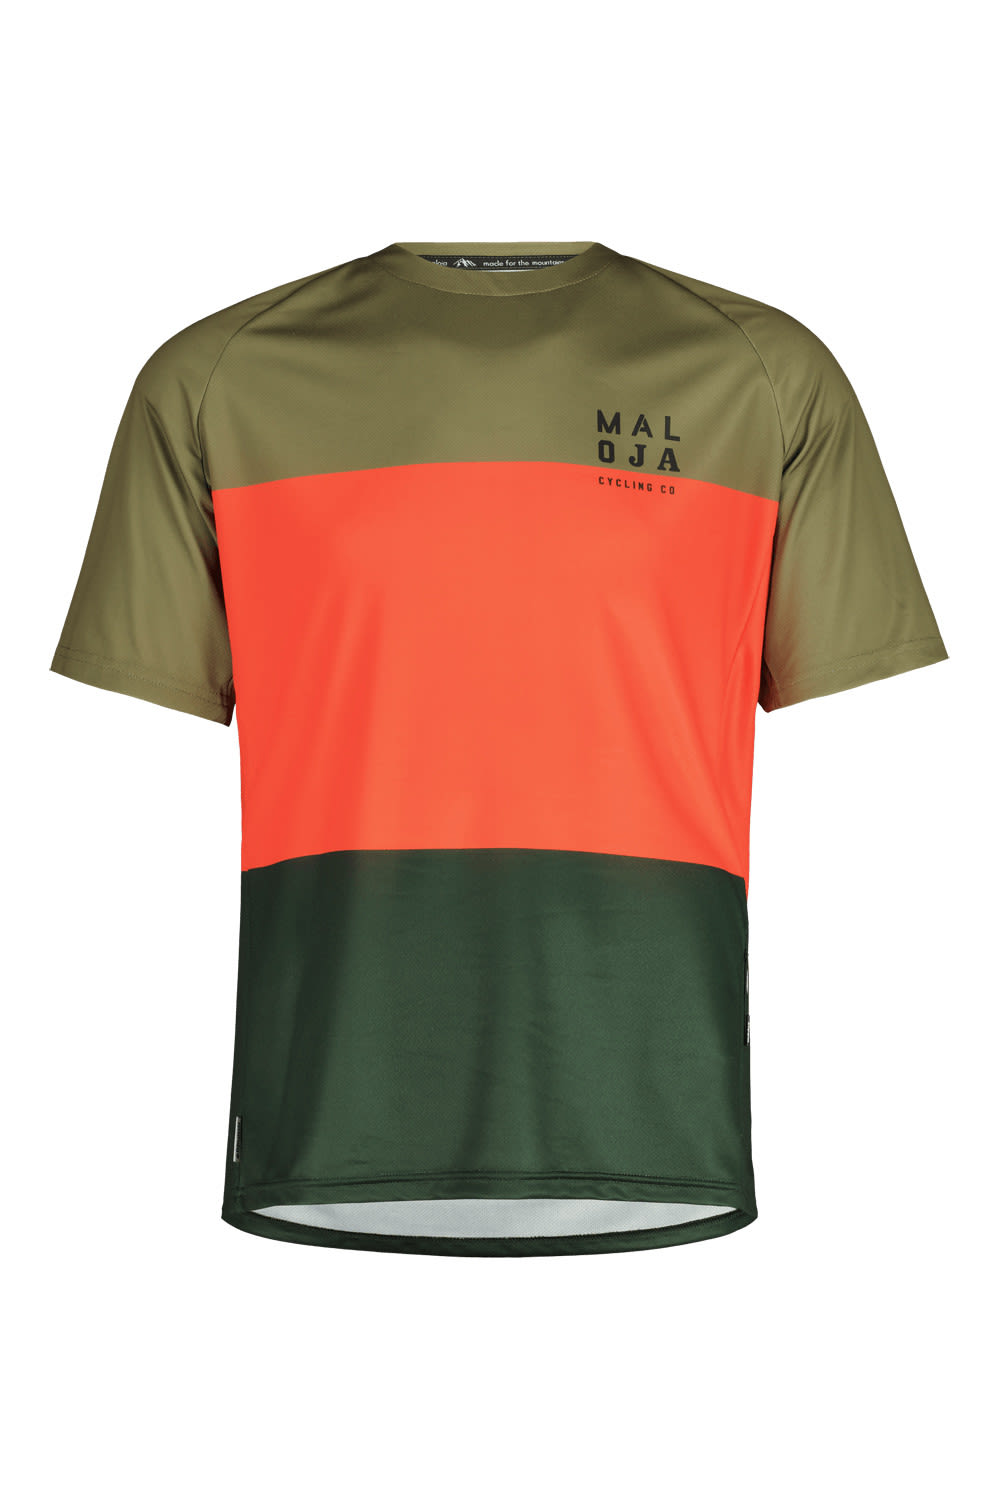 Maloja M Barettim. Multi T-shirt Colorblock / Grün | Herren Kurzarm-Radtrikot